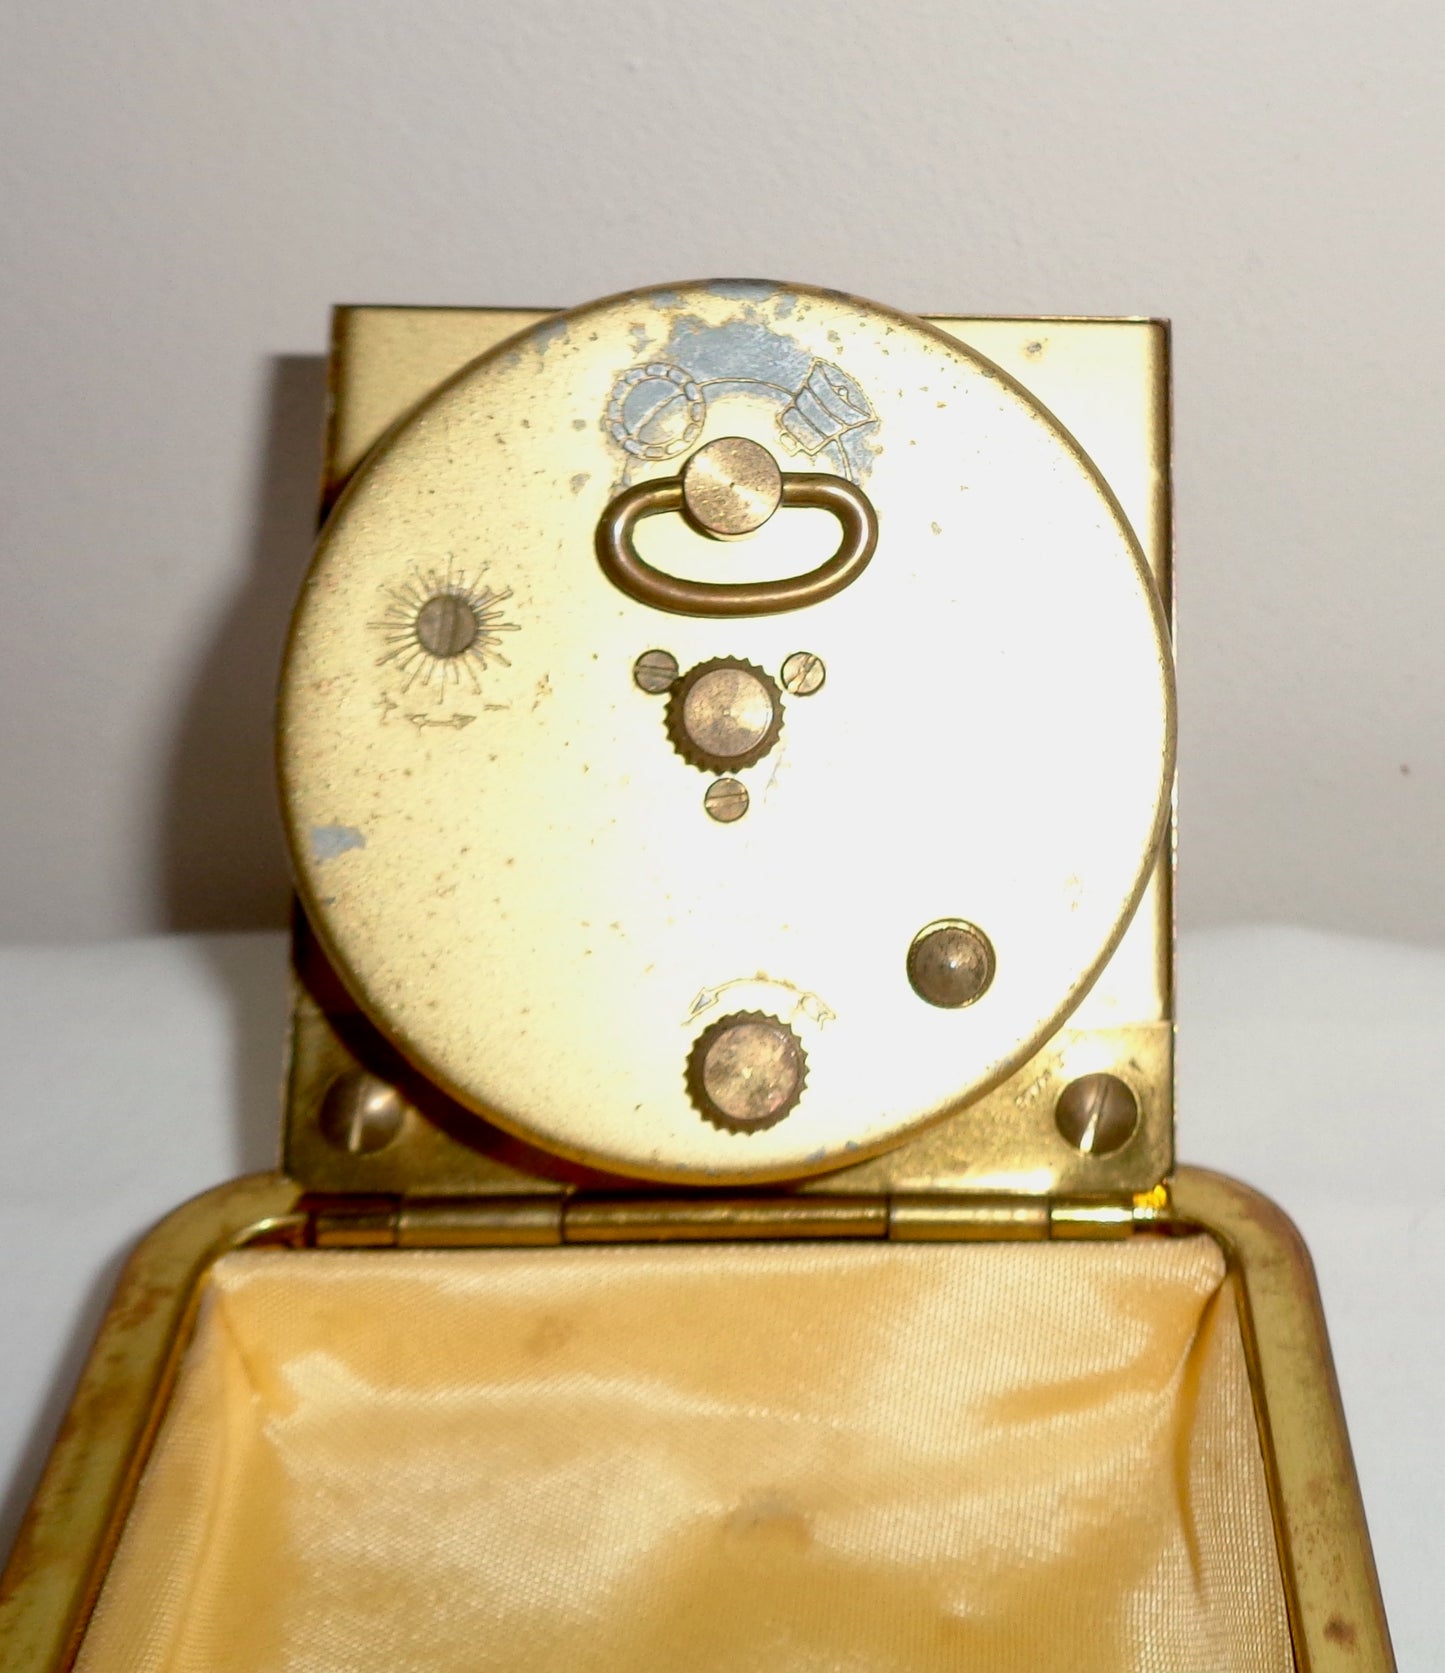 Vintage Europa Folding Travel Alarm Clock In Tan Brown